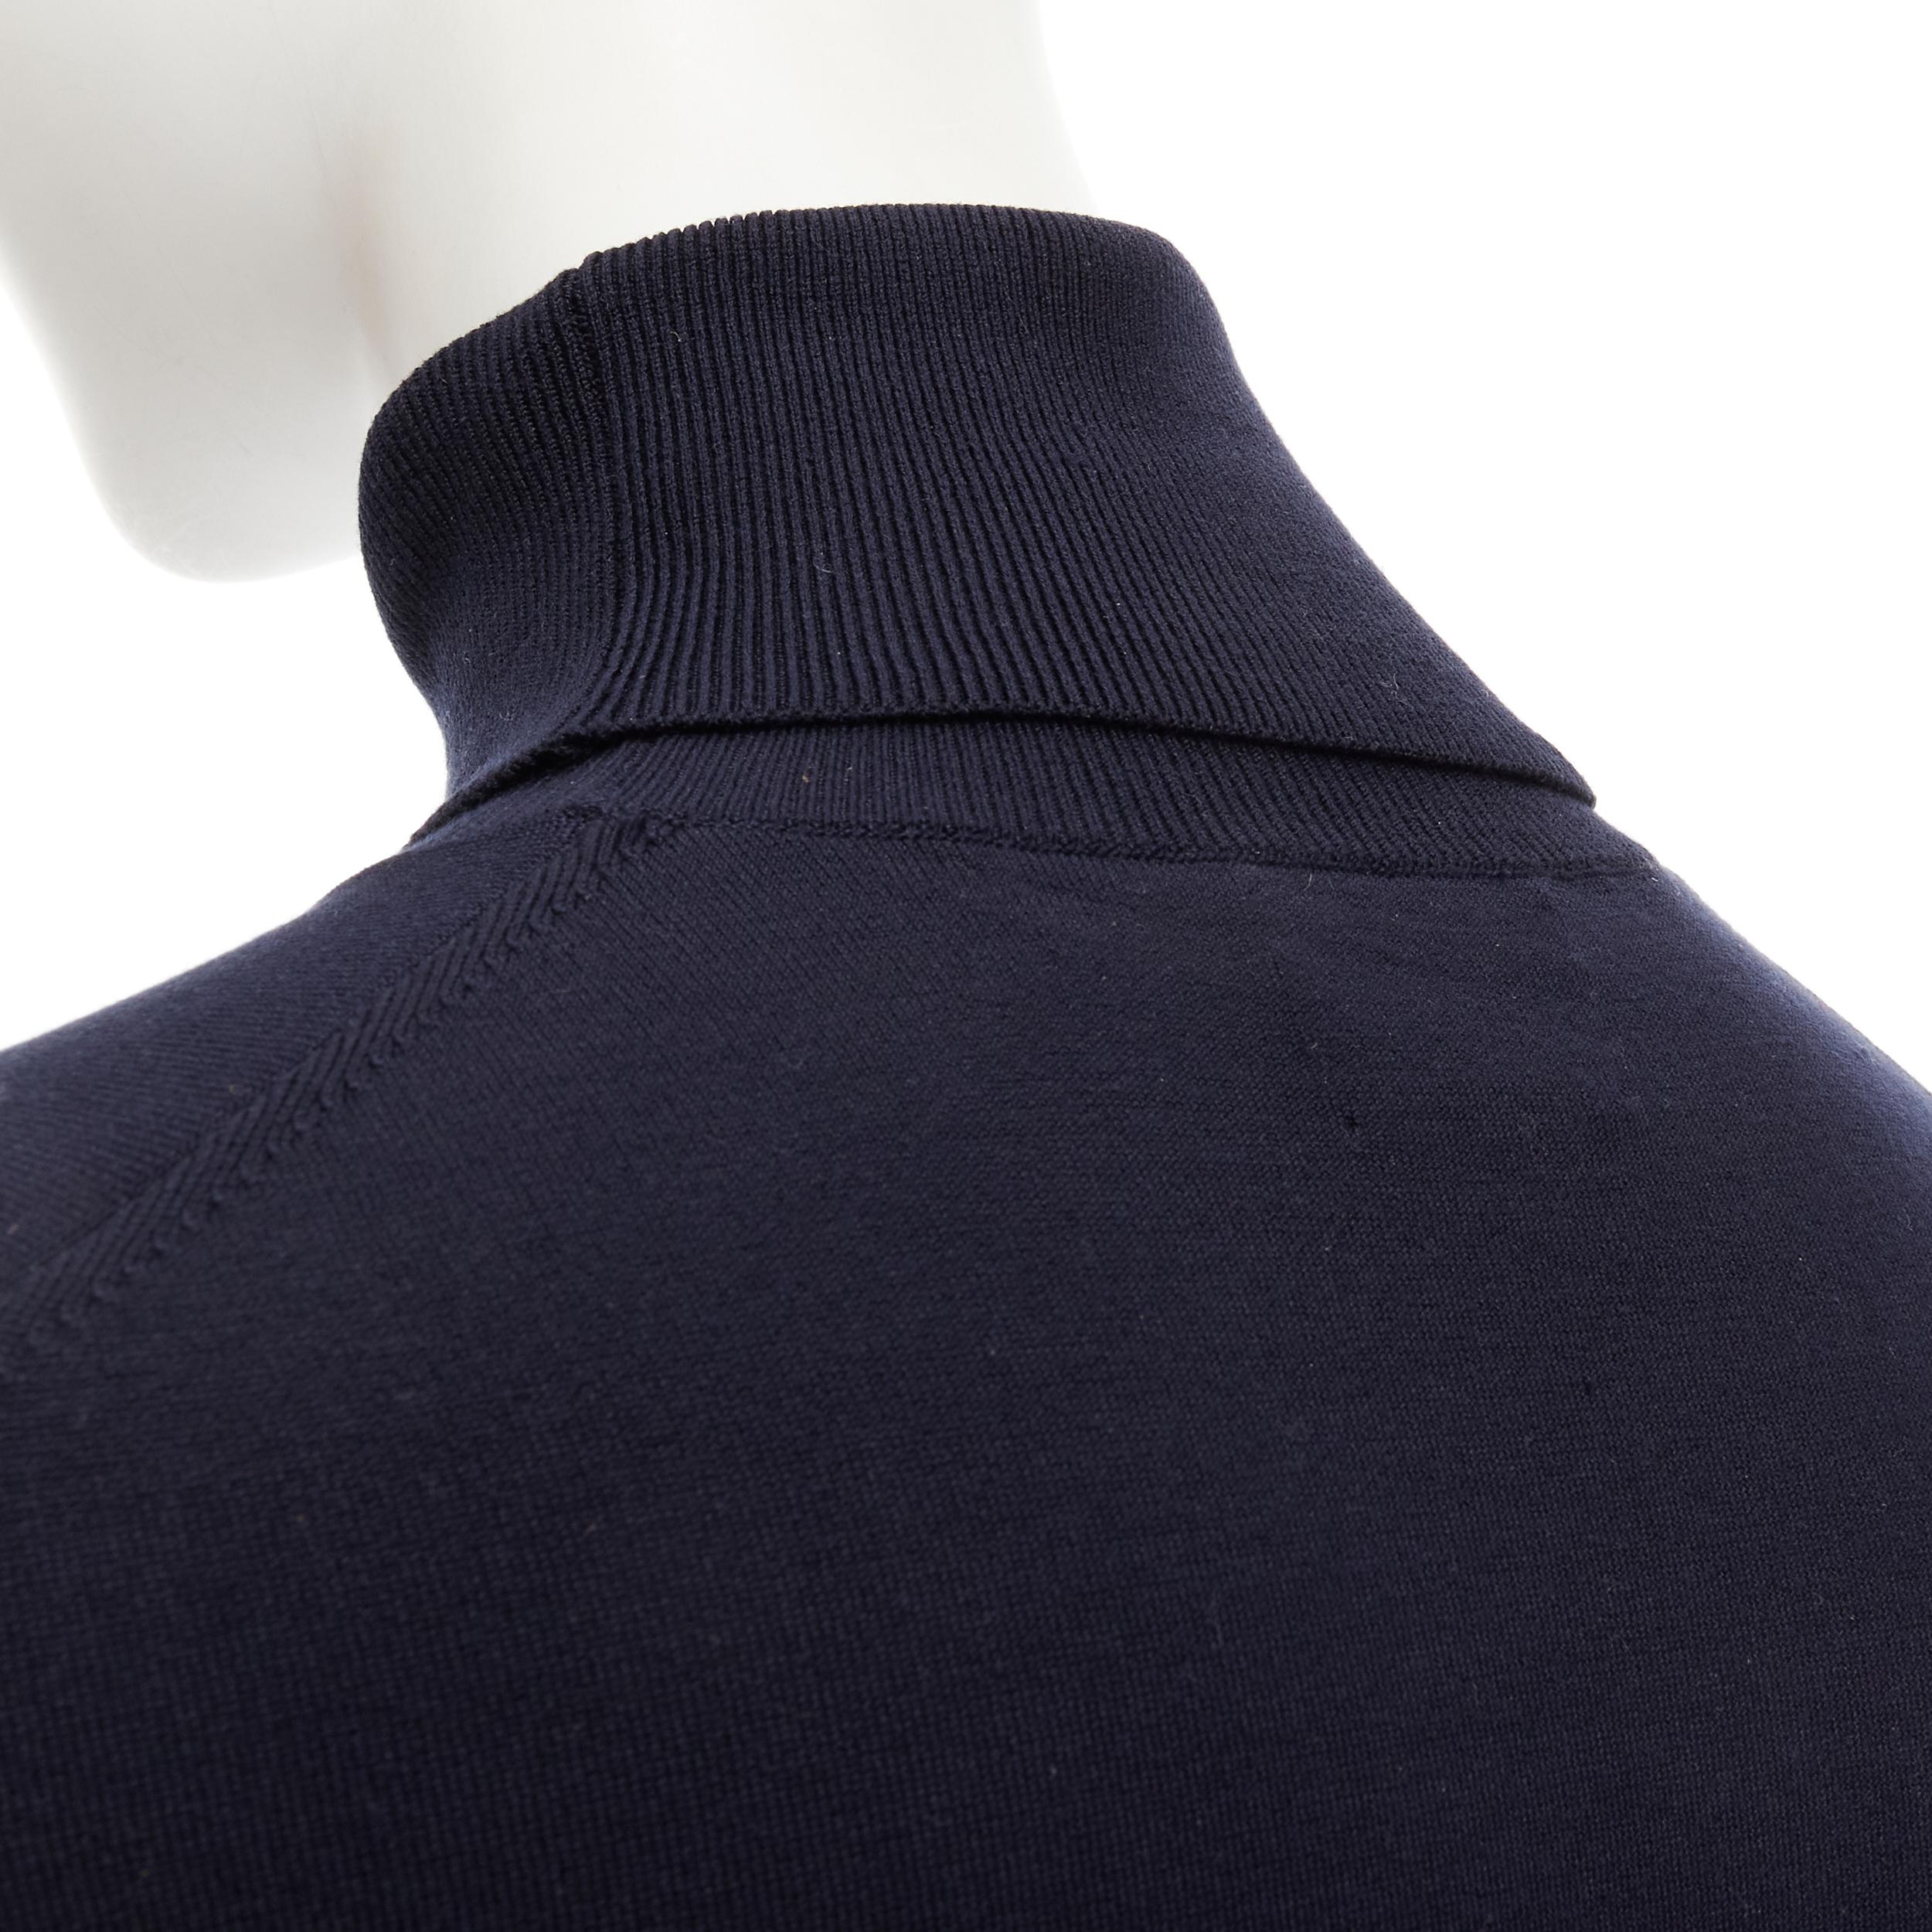 KORS MICHAEL KORS navy blue silk nylon knit long sleeve turtleneck sweater S For Sale 2